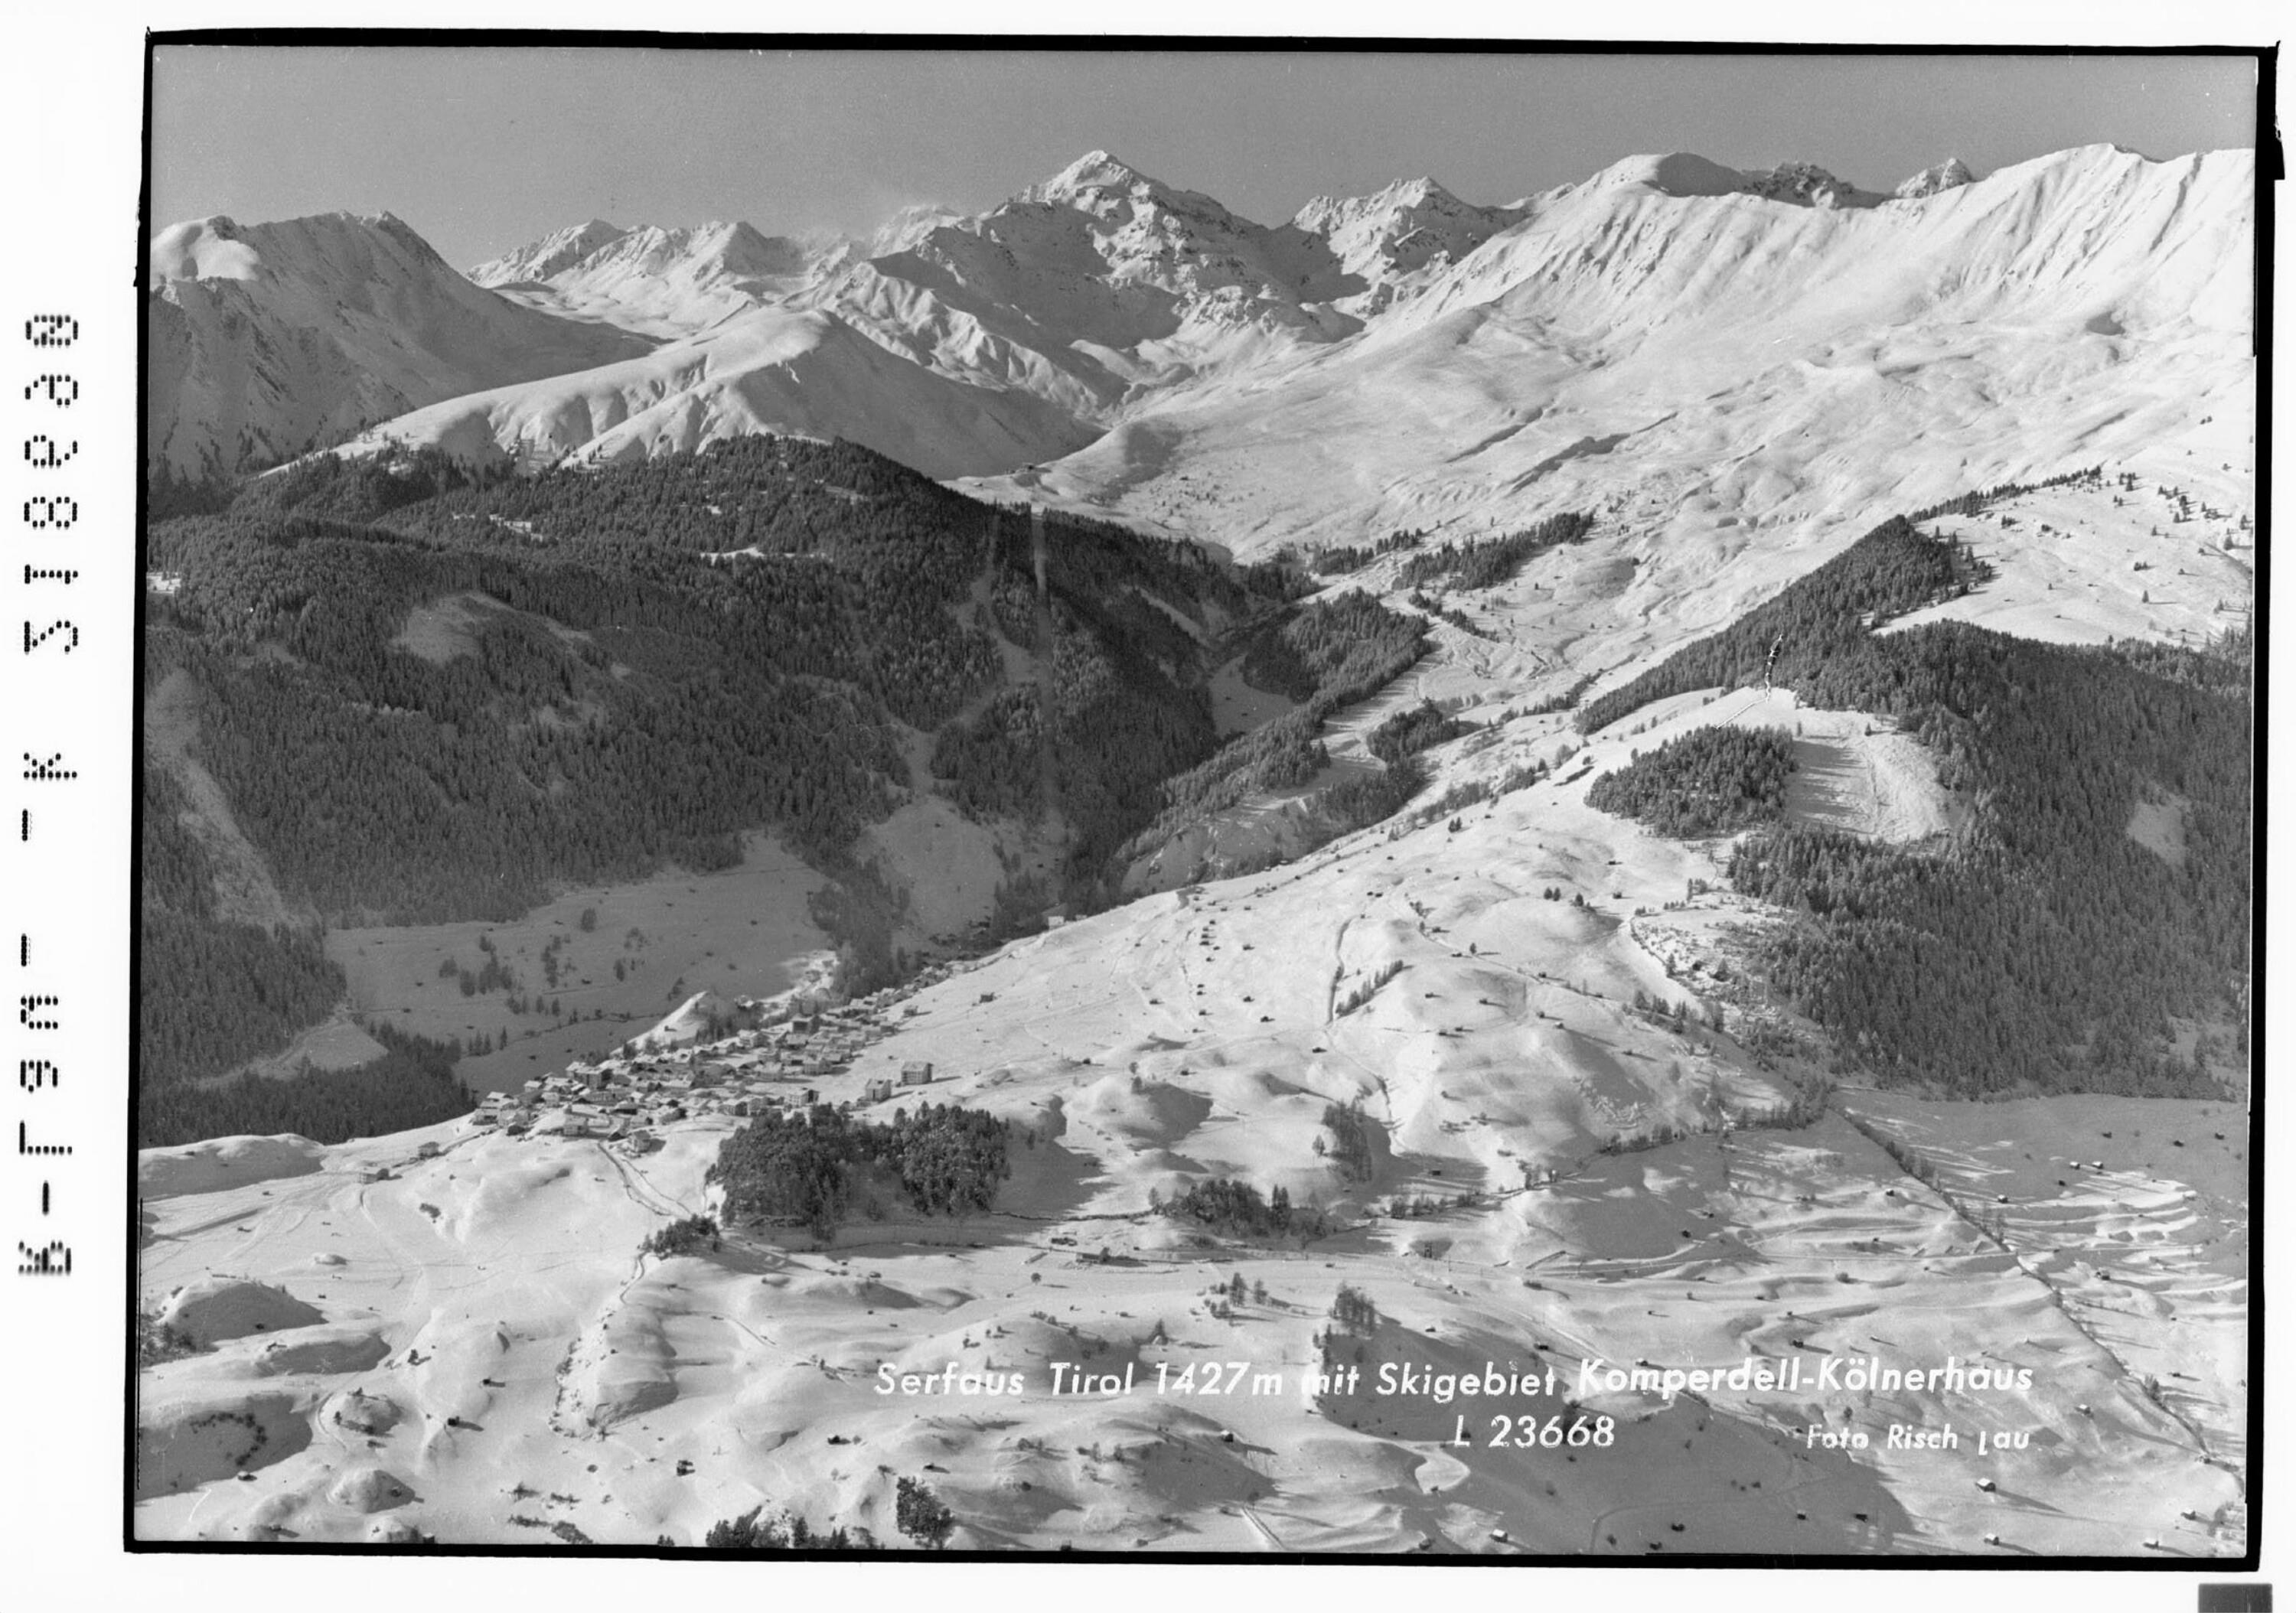 Serfaus Tirol 1427 m mit Skigebiet Komperdell - Kölnerhaus></div>


    <hr>
    <div class=